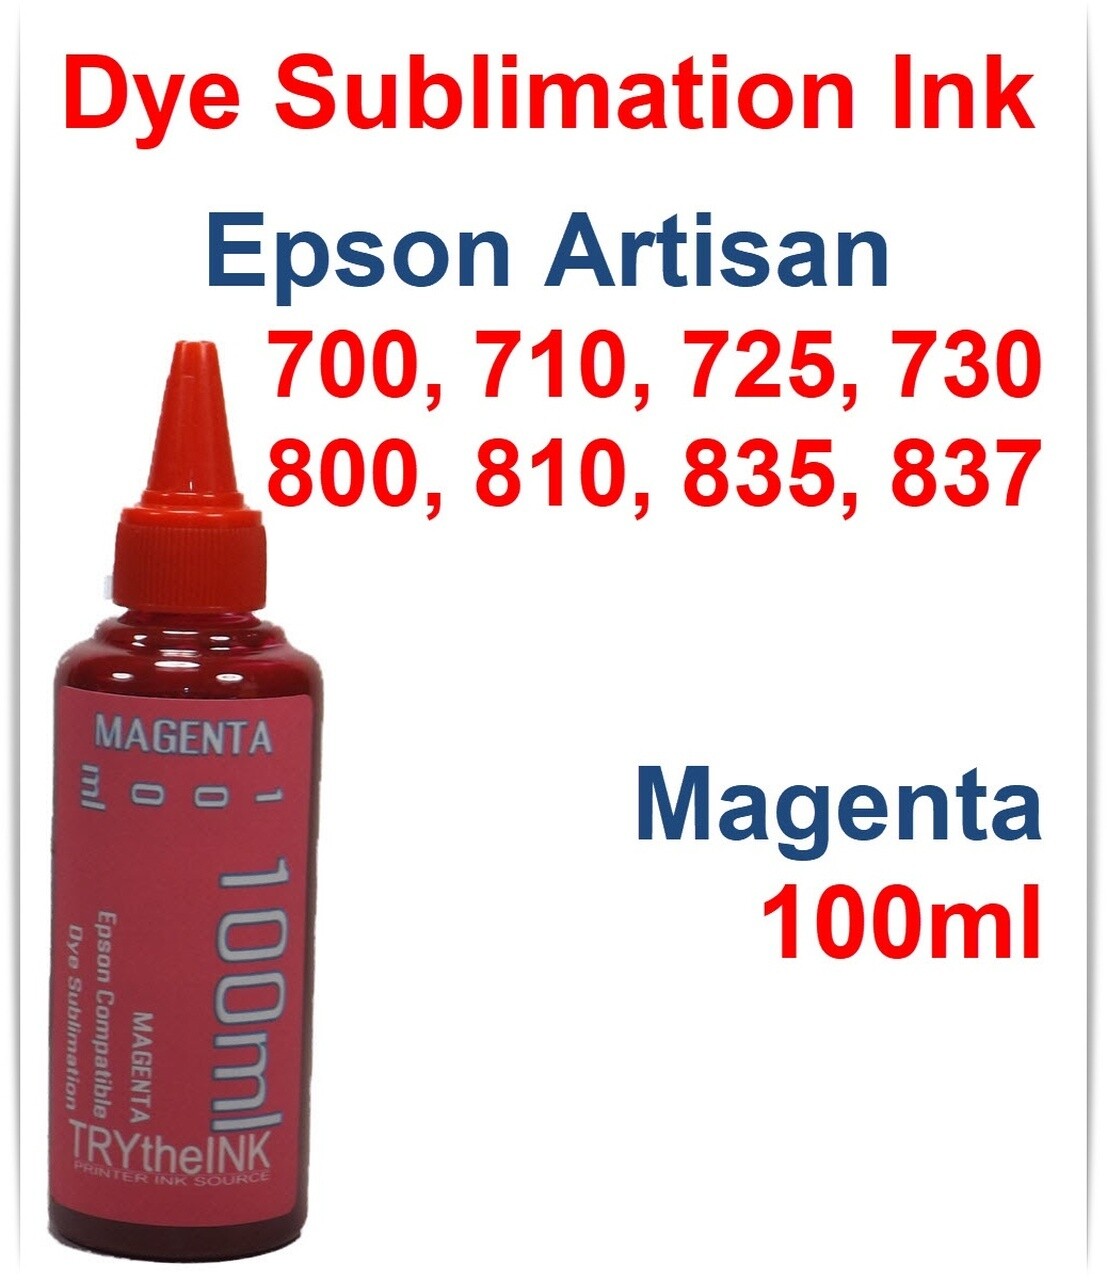 Magenta Dye Sublimation Ink 100ml for Epson Artisan 700 710 725 730 800 810 835 837